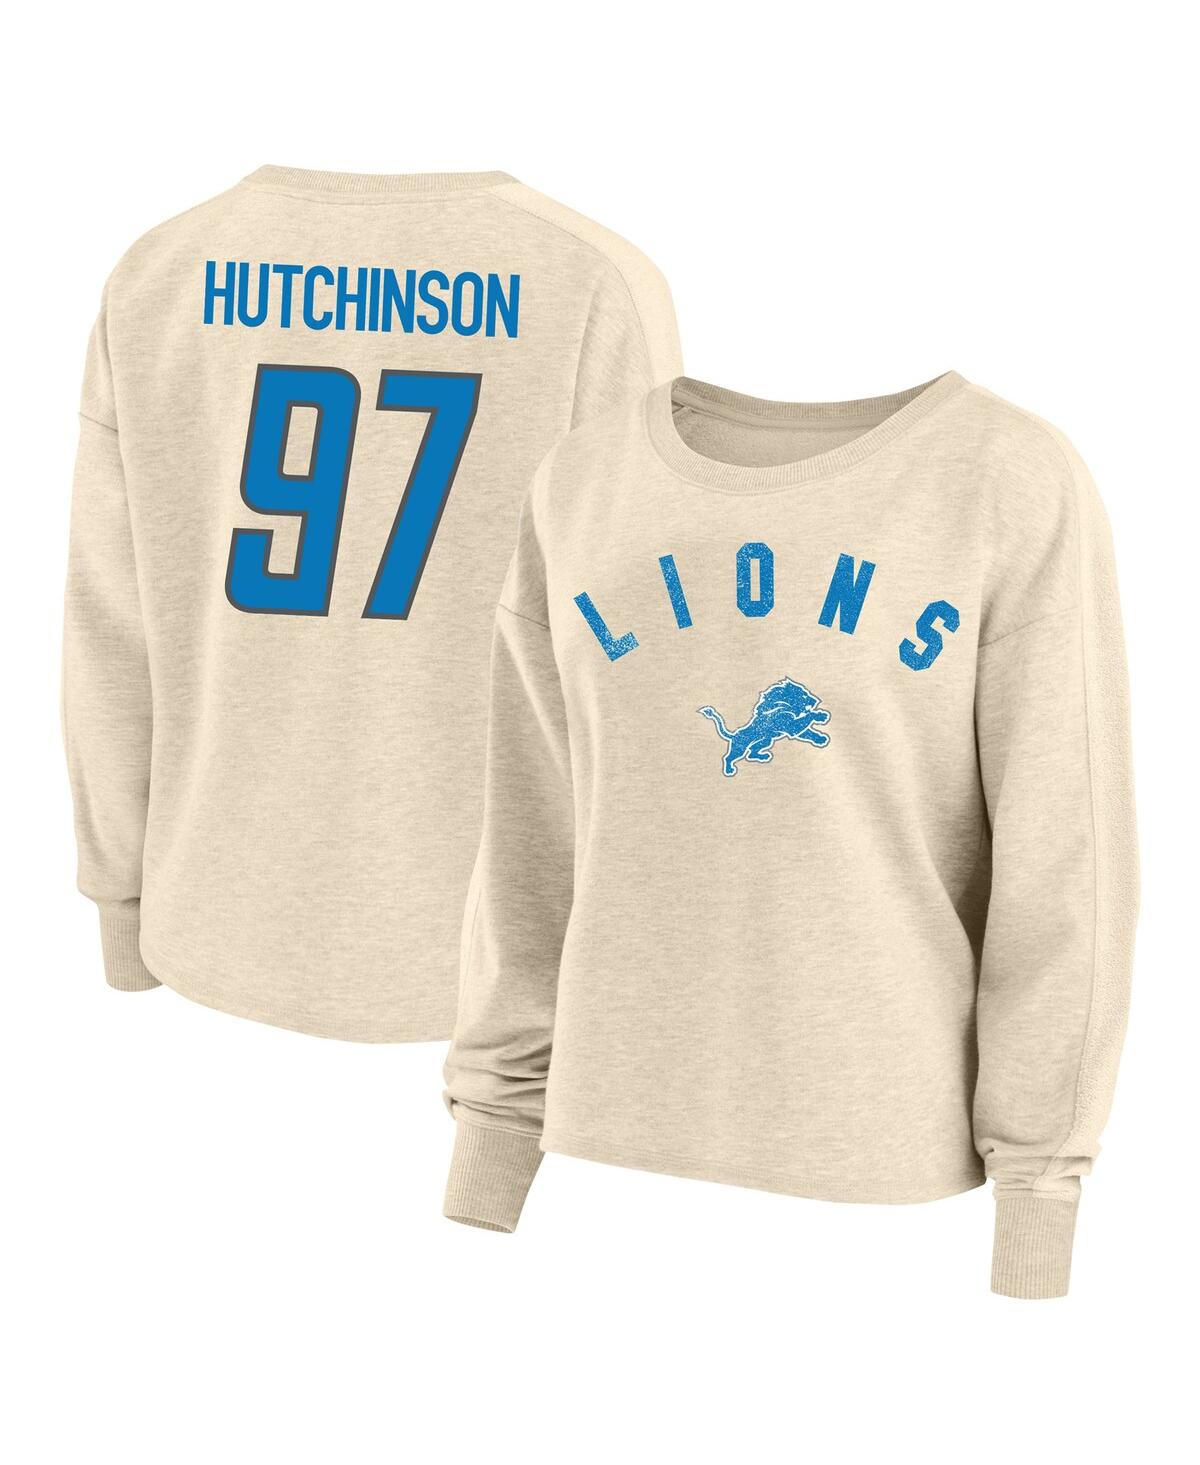 Women's Aidan Hutchinson Oatmeal Detroit Lions Plus Size Name Number Crew Pullover Sweatshirt - Oatmeal